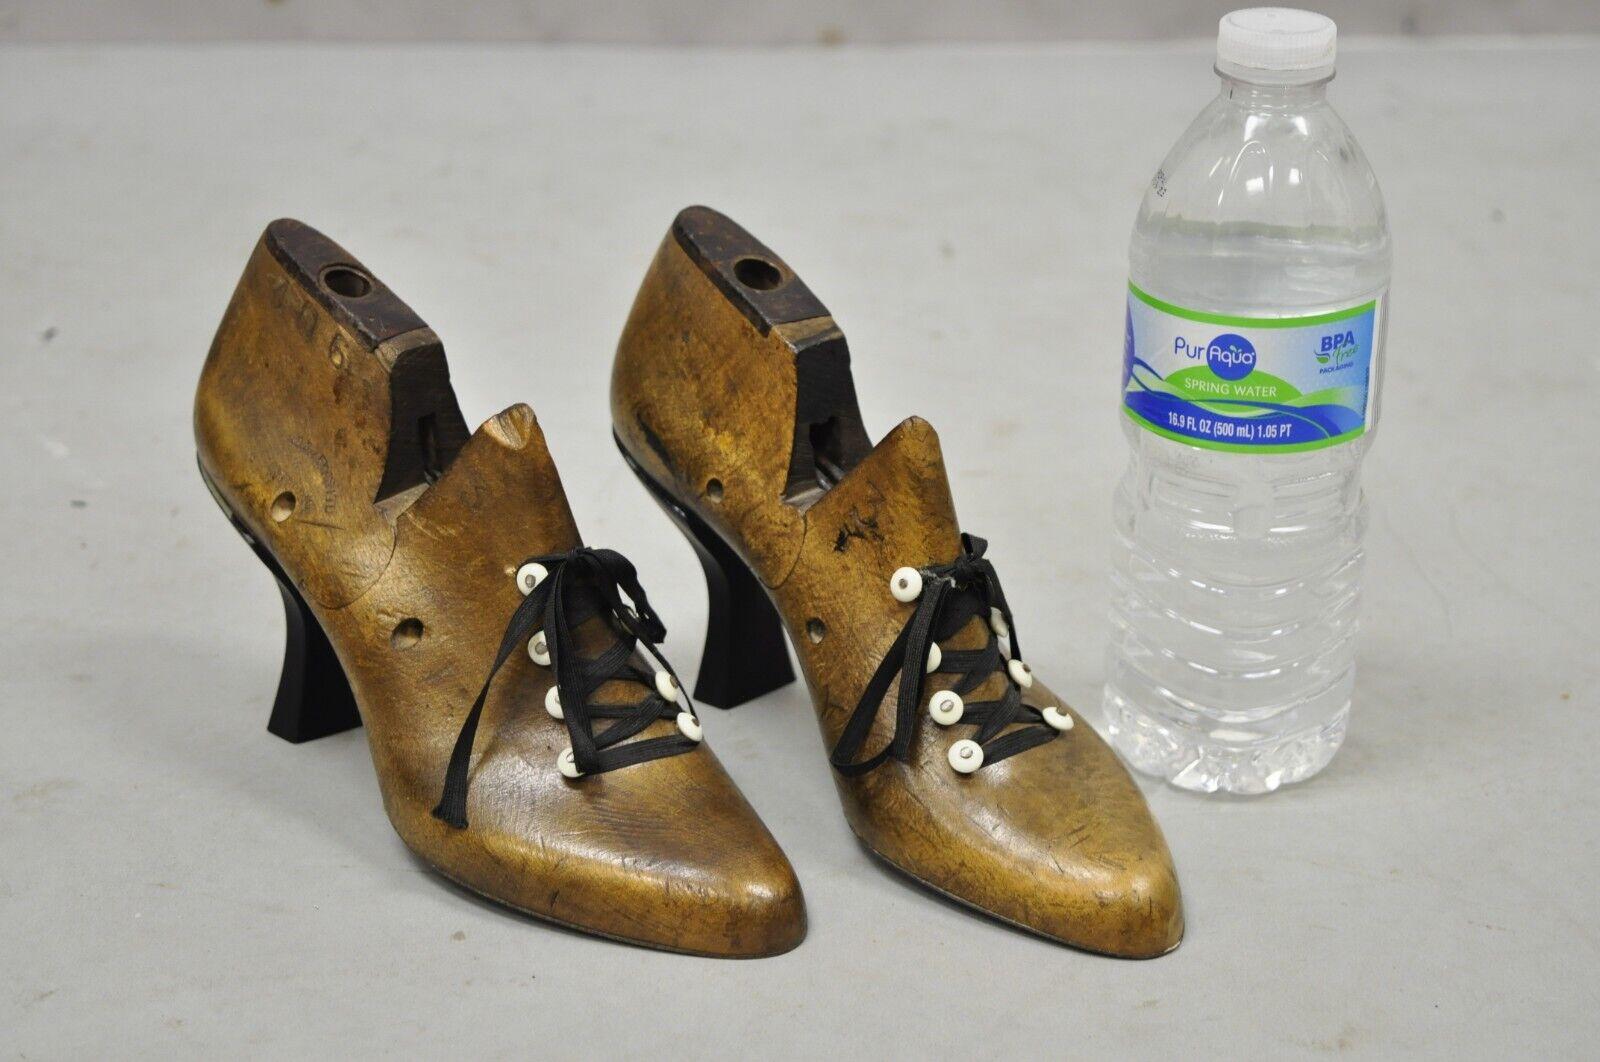 Antique Mobbs & Lewis Ltd Wooden English shoe lasts women's heel - a Pair. Item features original antique wooden shoe lasts, repurposed form with heels and laces, very nice antique pair. Circa 19th Century. Measurements: 5.5